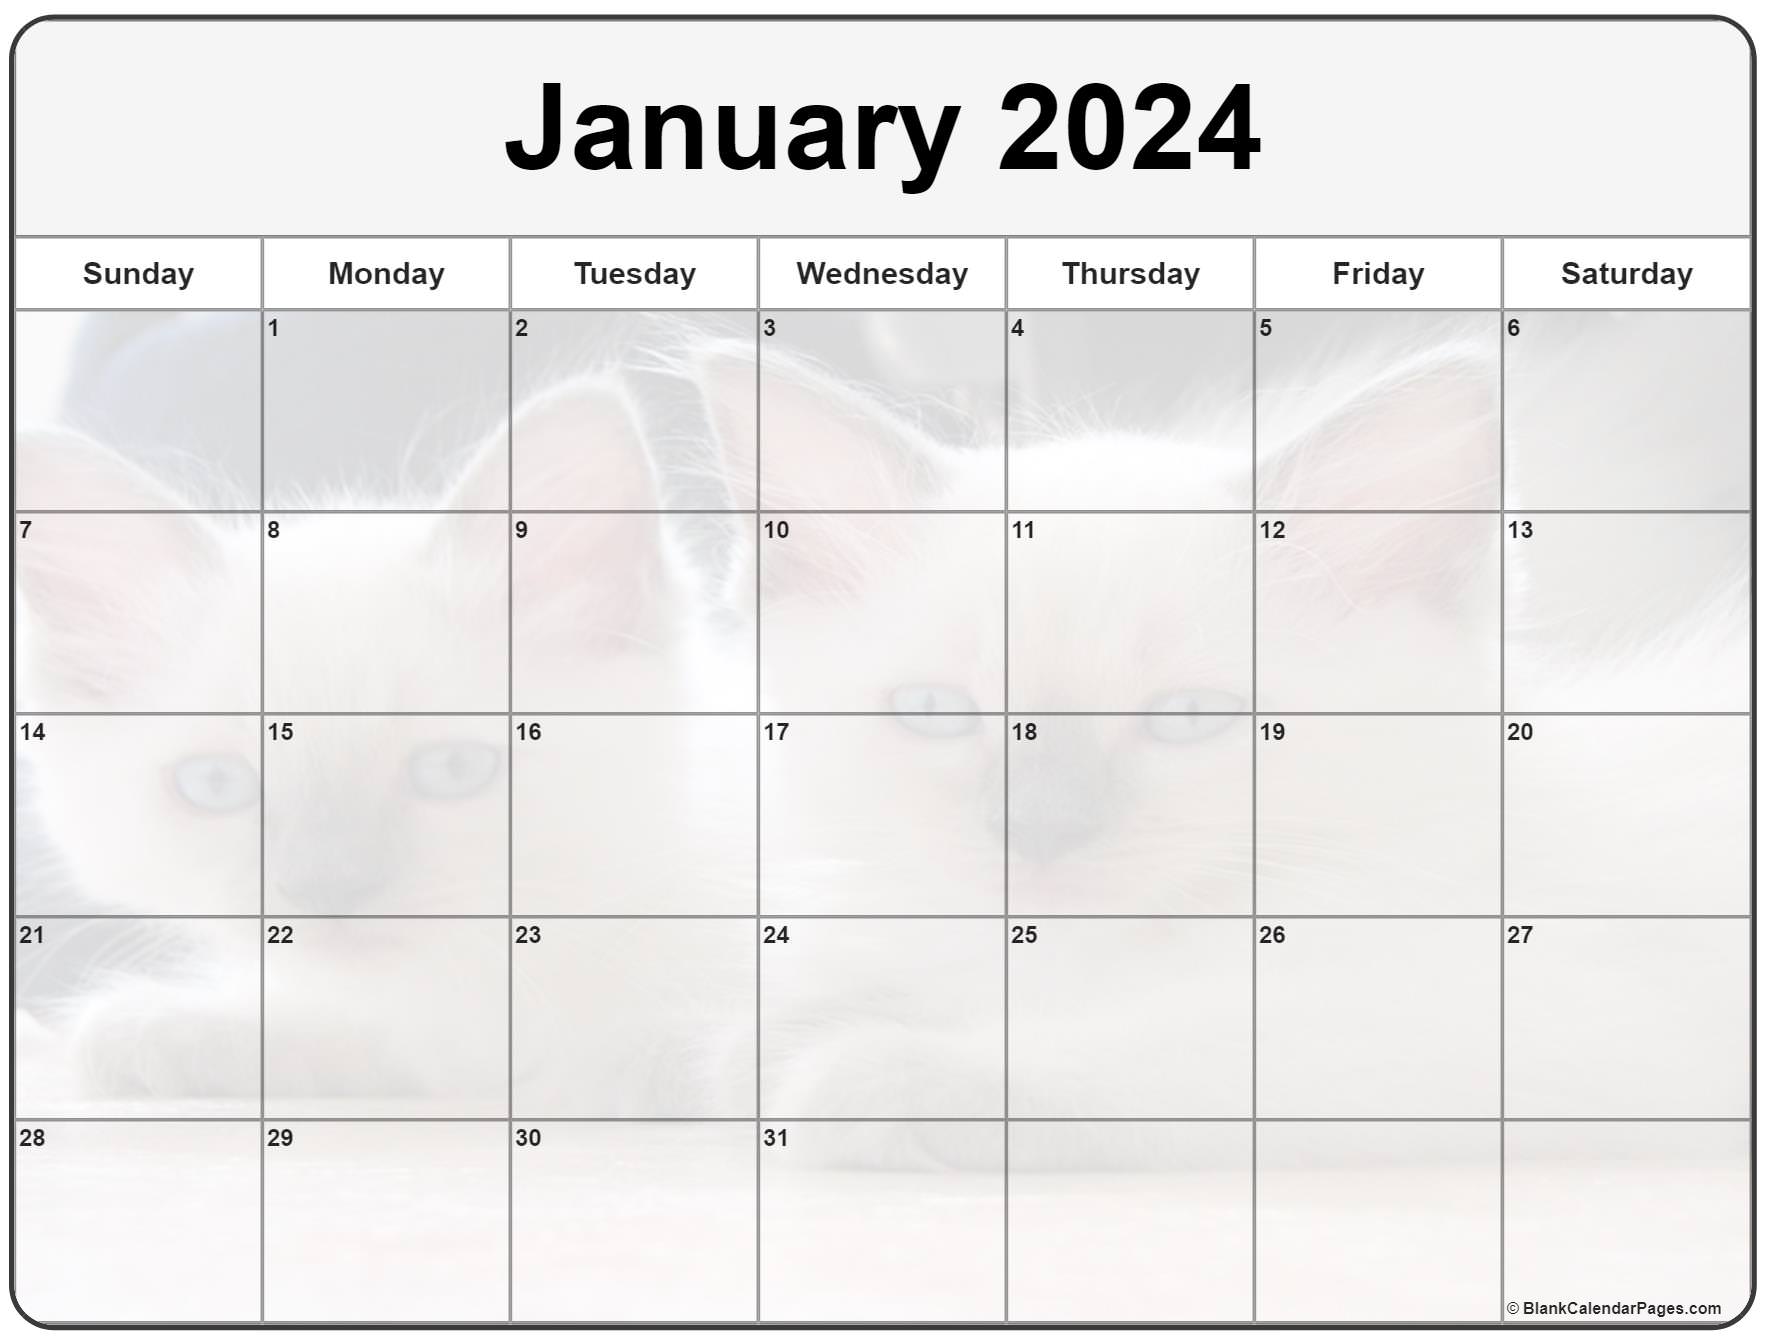 January 2023 Calendar Background